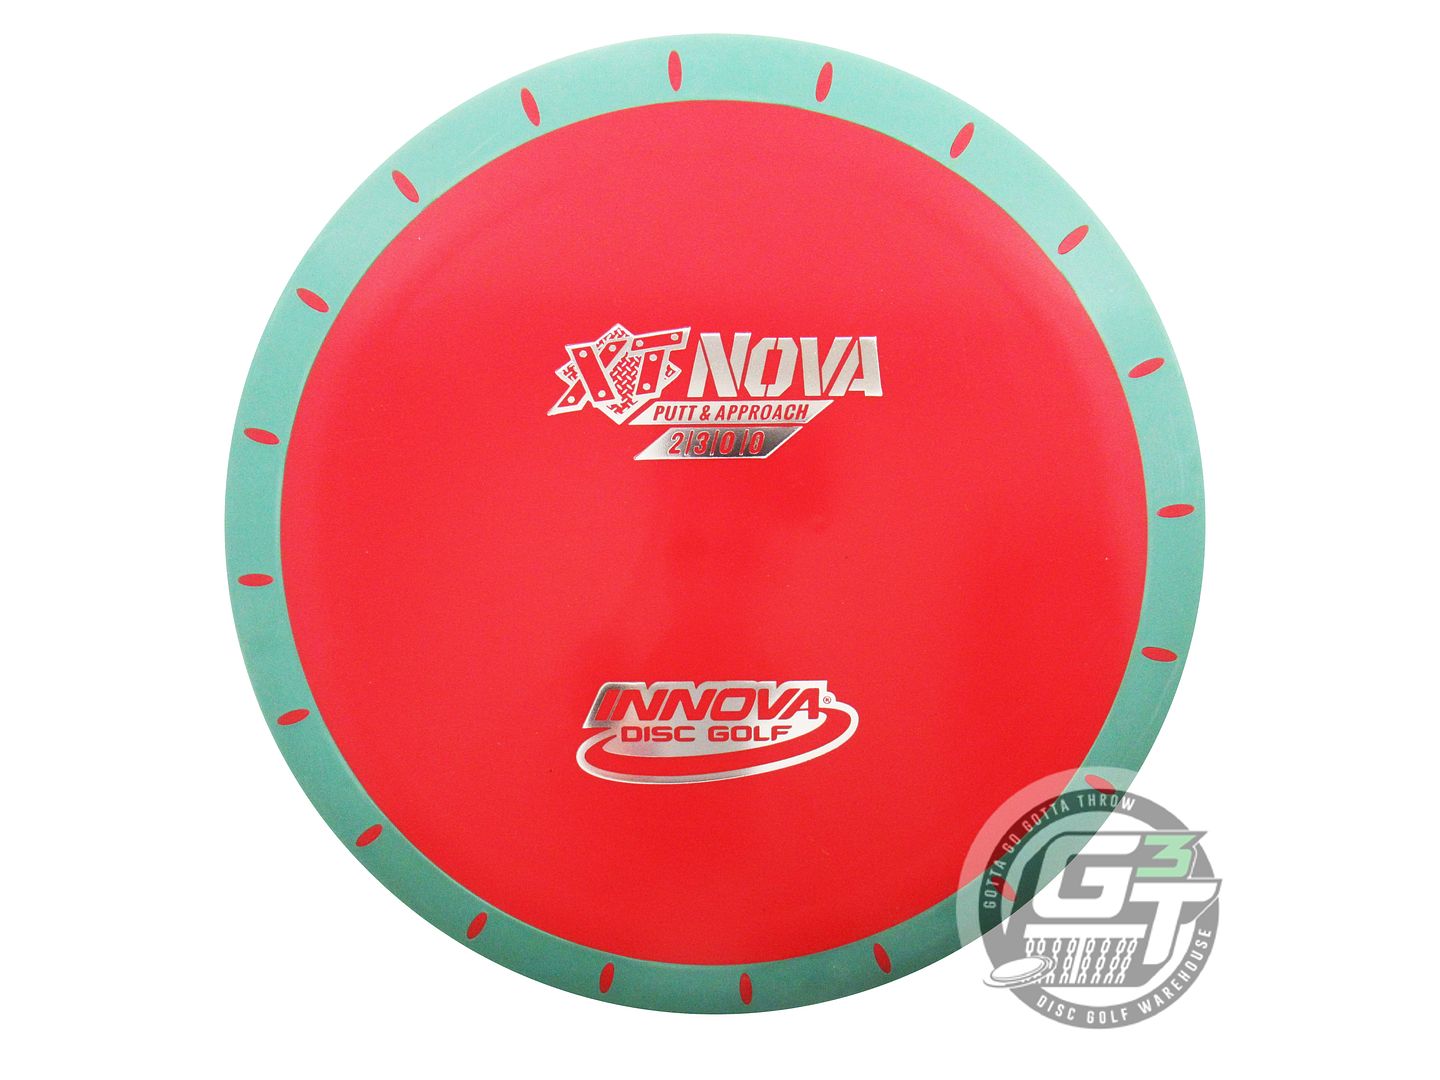 Innova XT Nova Putter Golf Disc (Individually Listed)